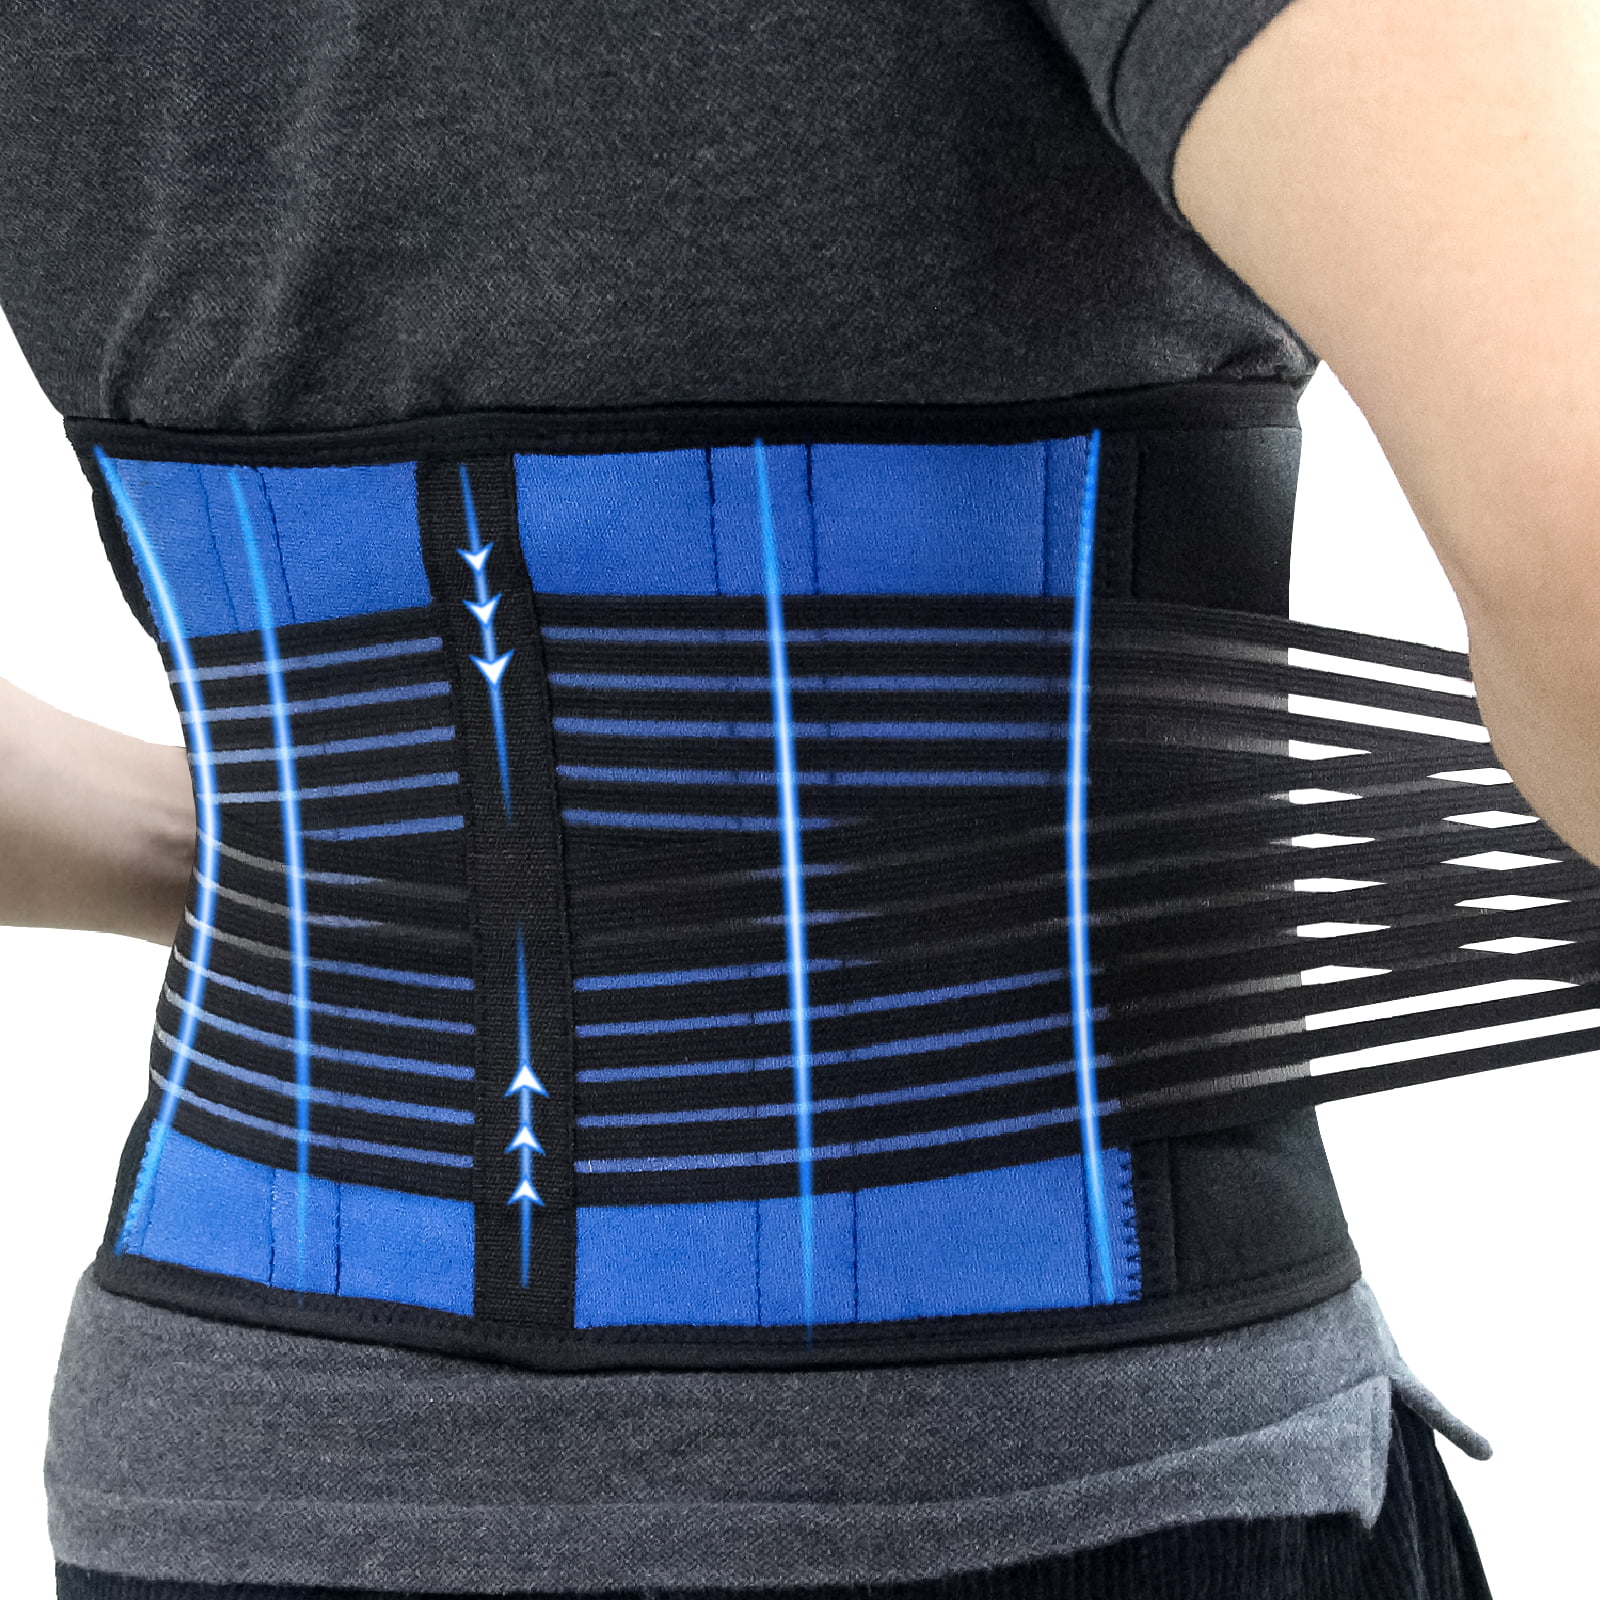 CFR Lower Back Support Waist Brace Lumbar Belt Double Pull Compression Pain Wrap 